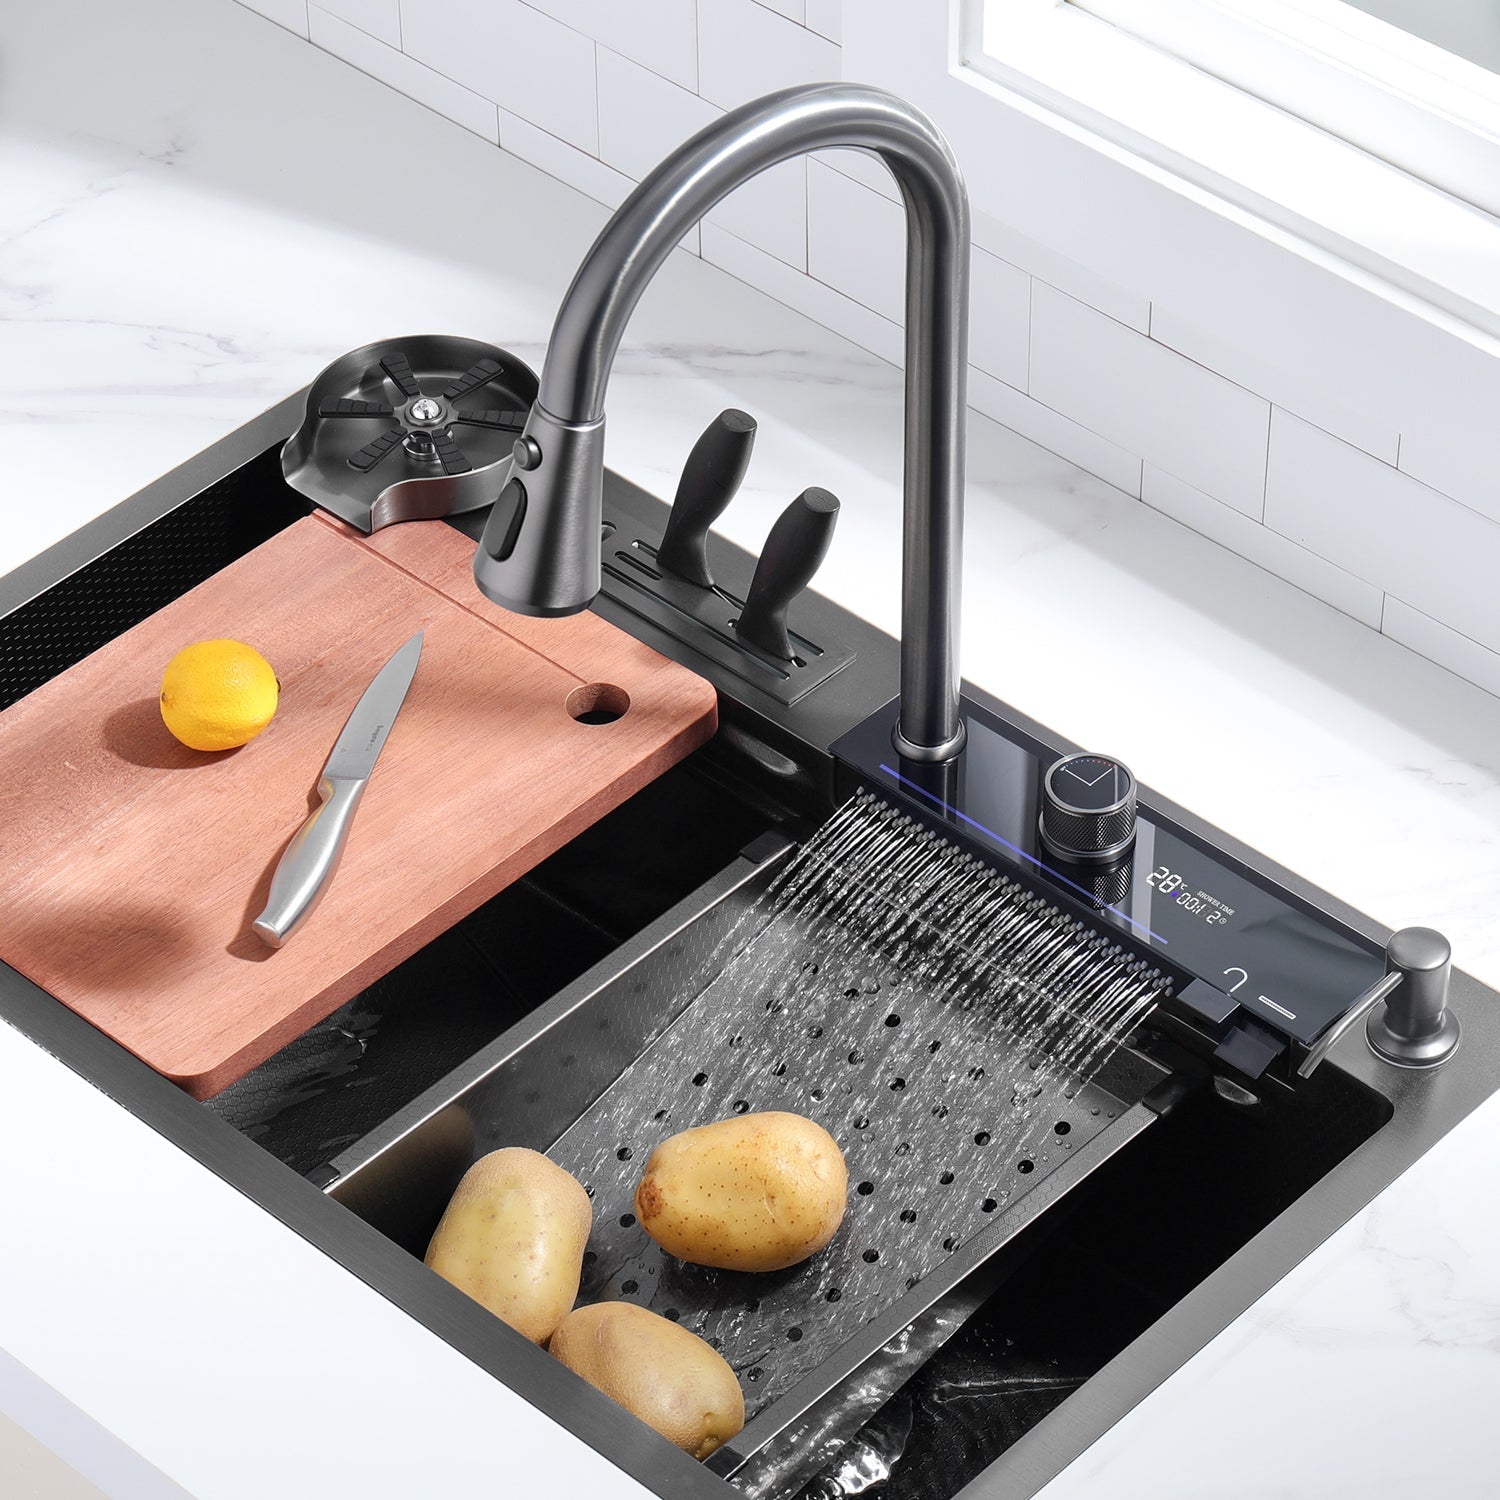 Lefton Waterfall Workstation Kitchen Sink Set Digital Temperature Display & LED Lighting - KS2205L - Kitchen Sinks - Lefton Home